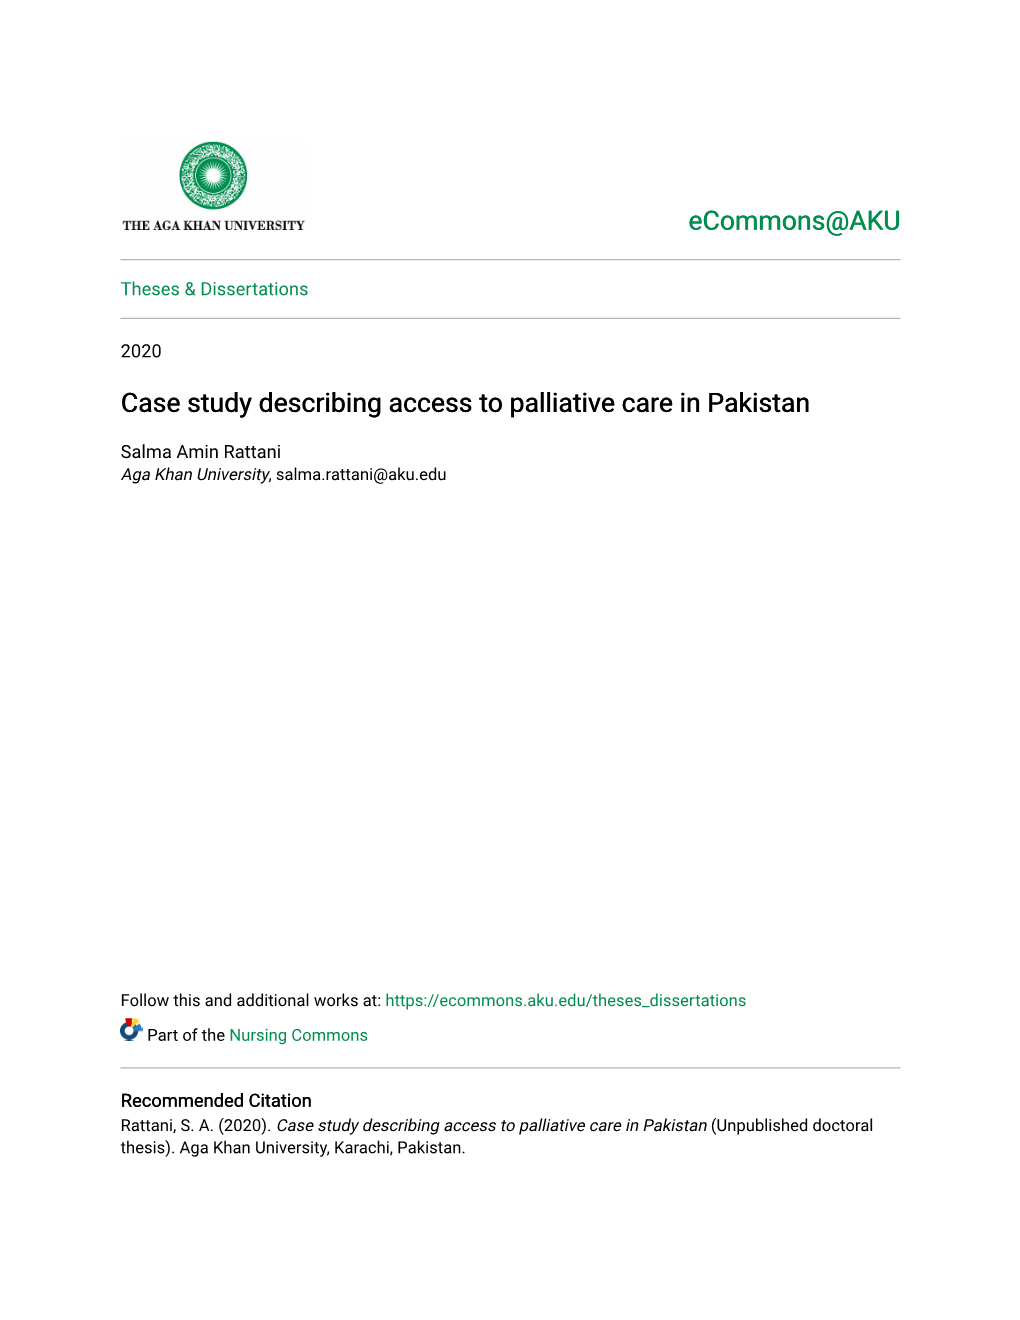 Case Study Describing Access to Palliative Care in Pakistan